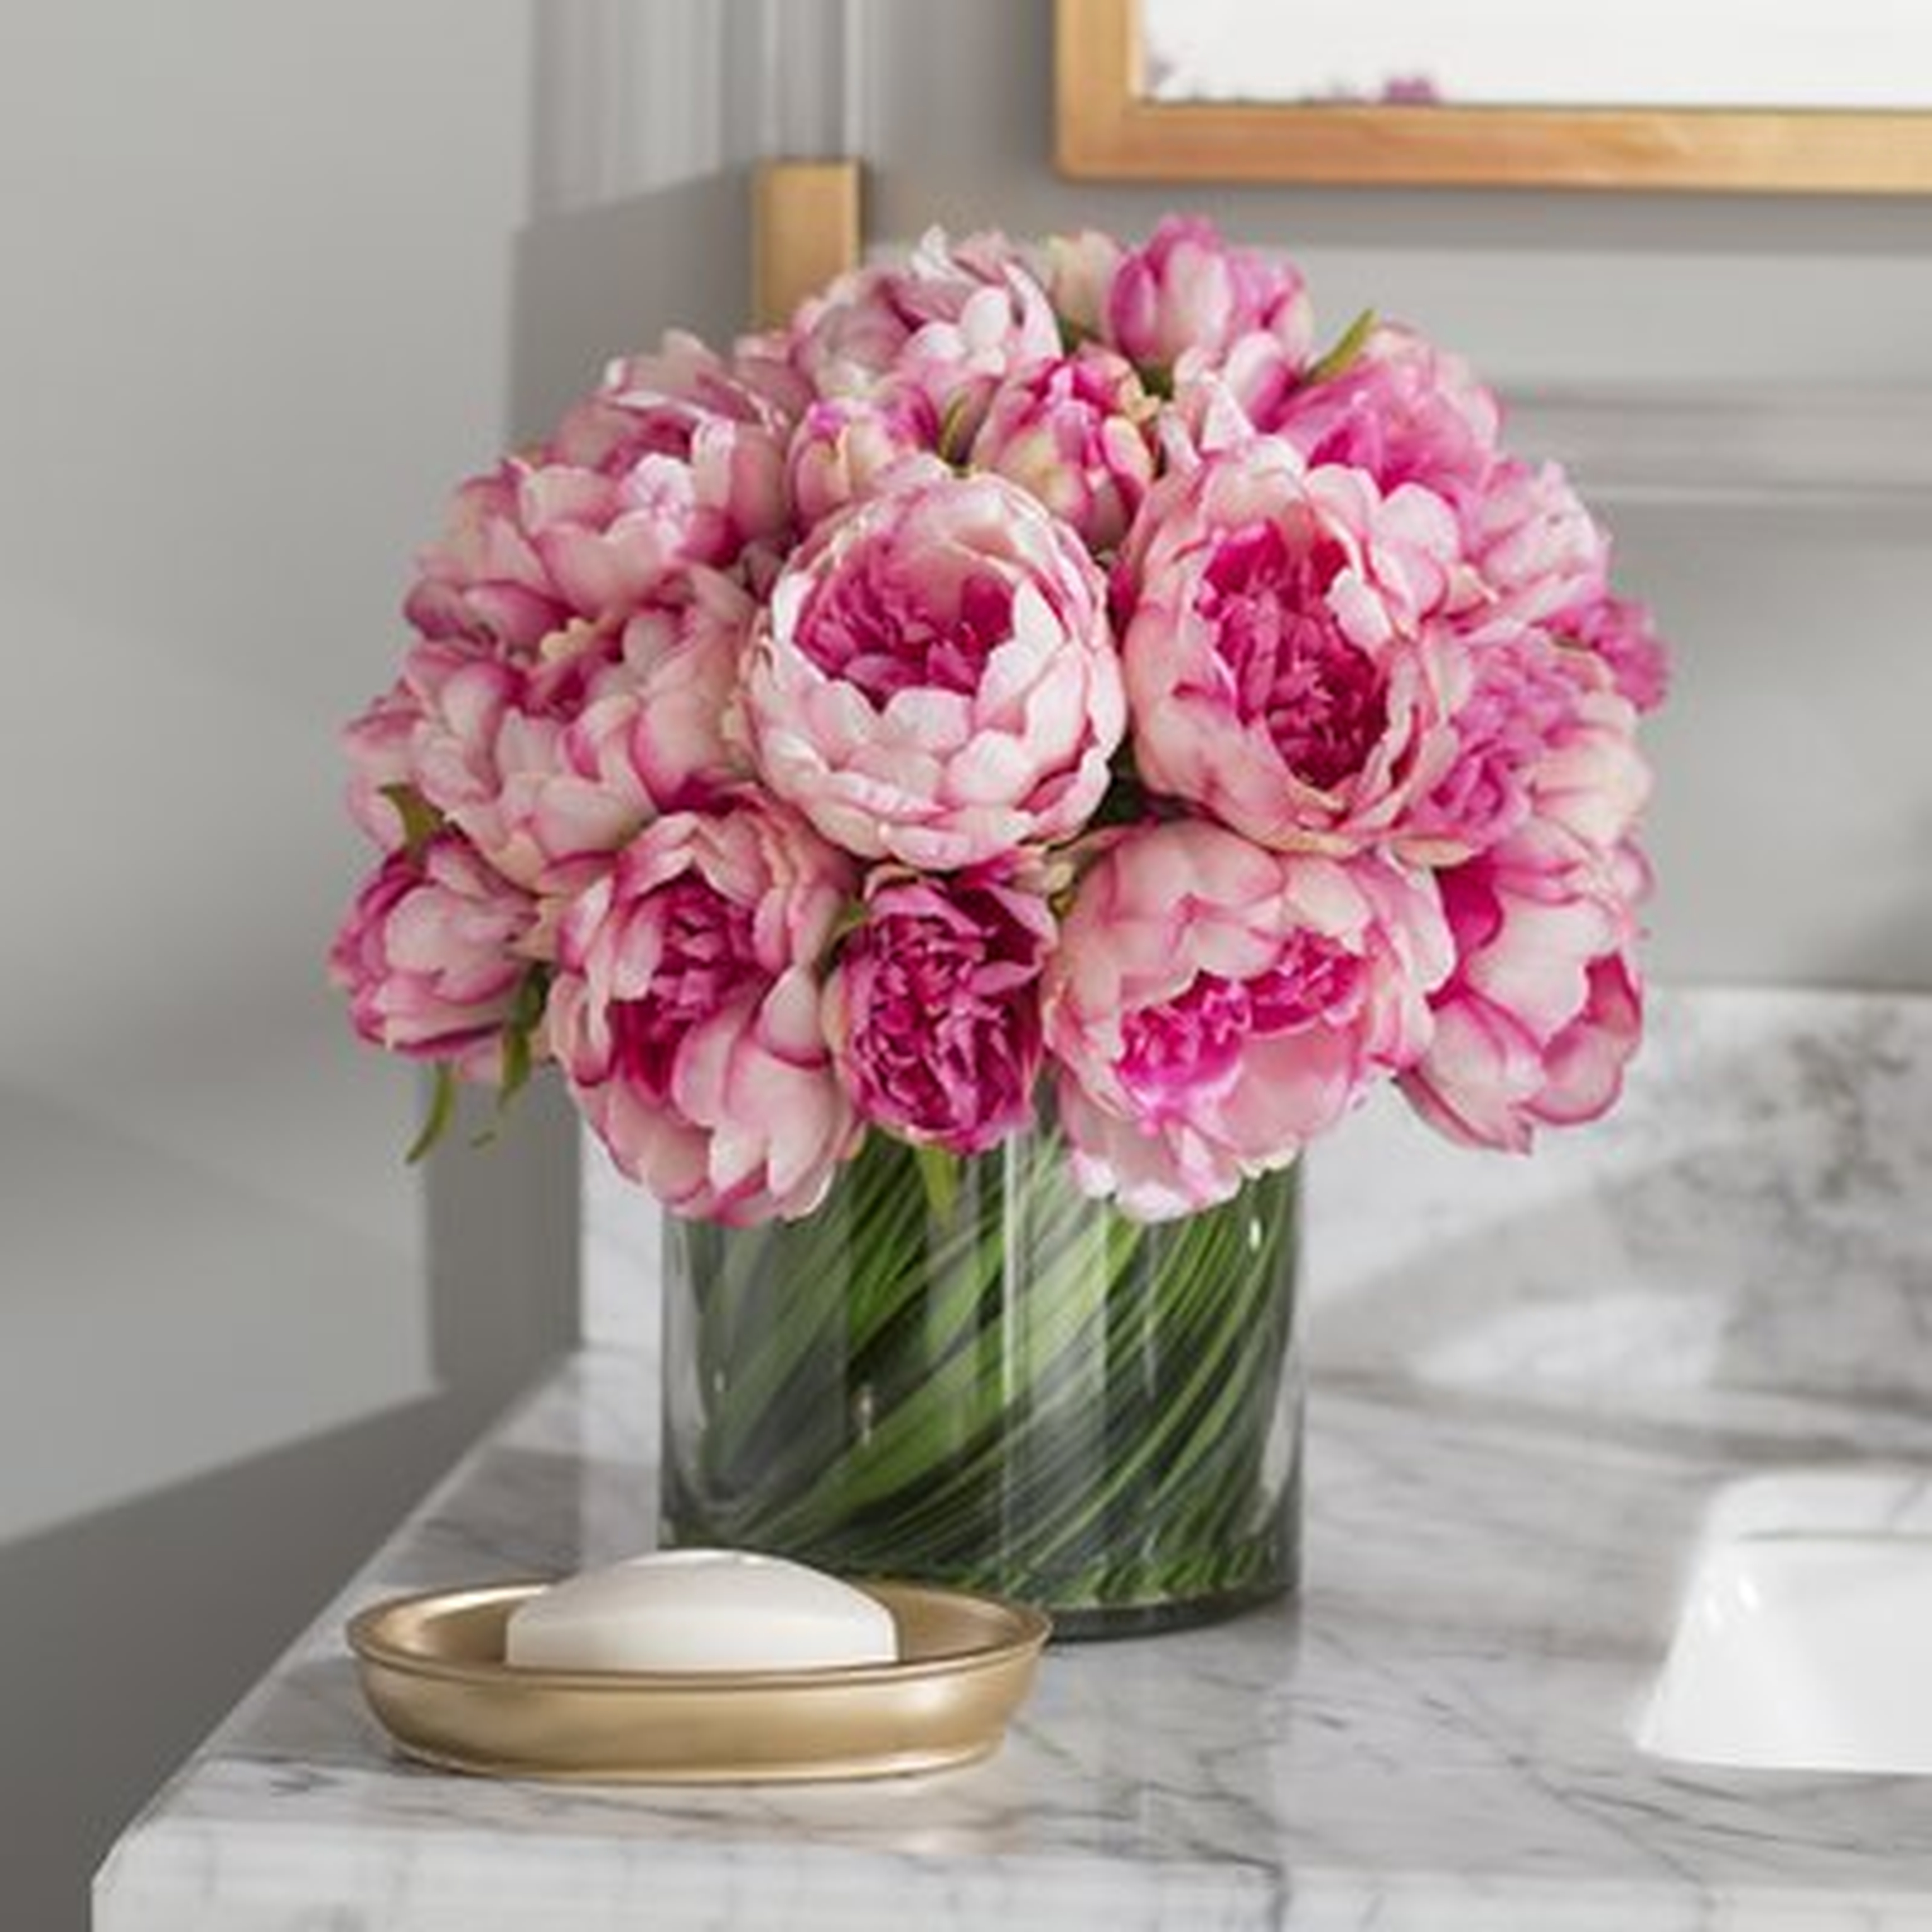 Faux Magenta & Pink Peony Floral Arrangement in Glass Vase - Birch Lane